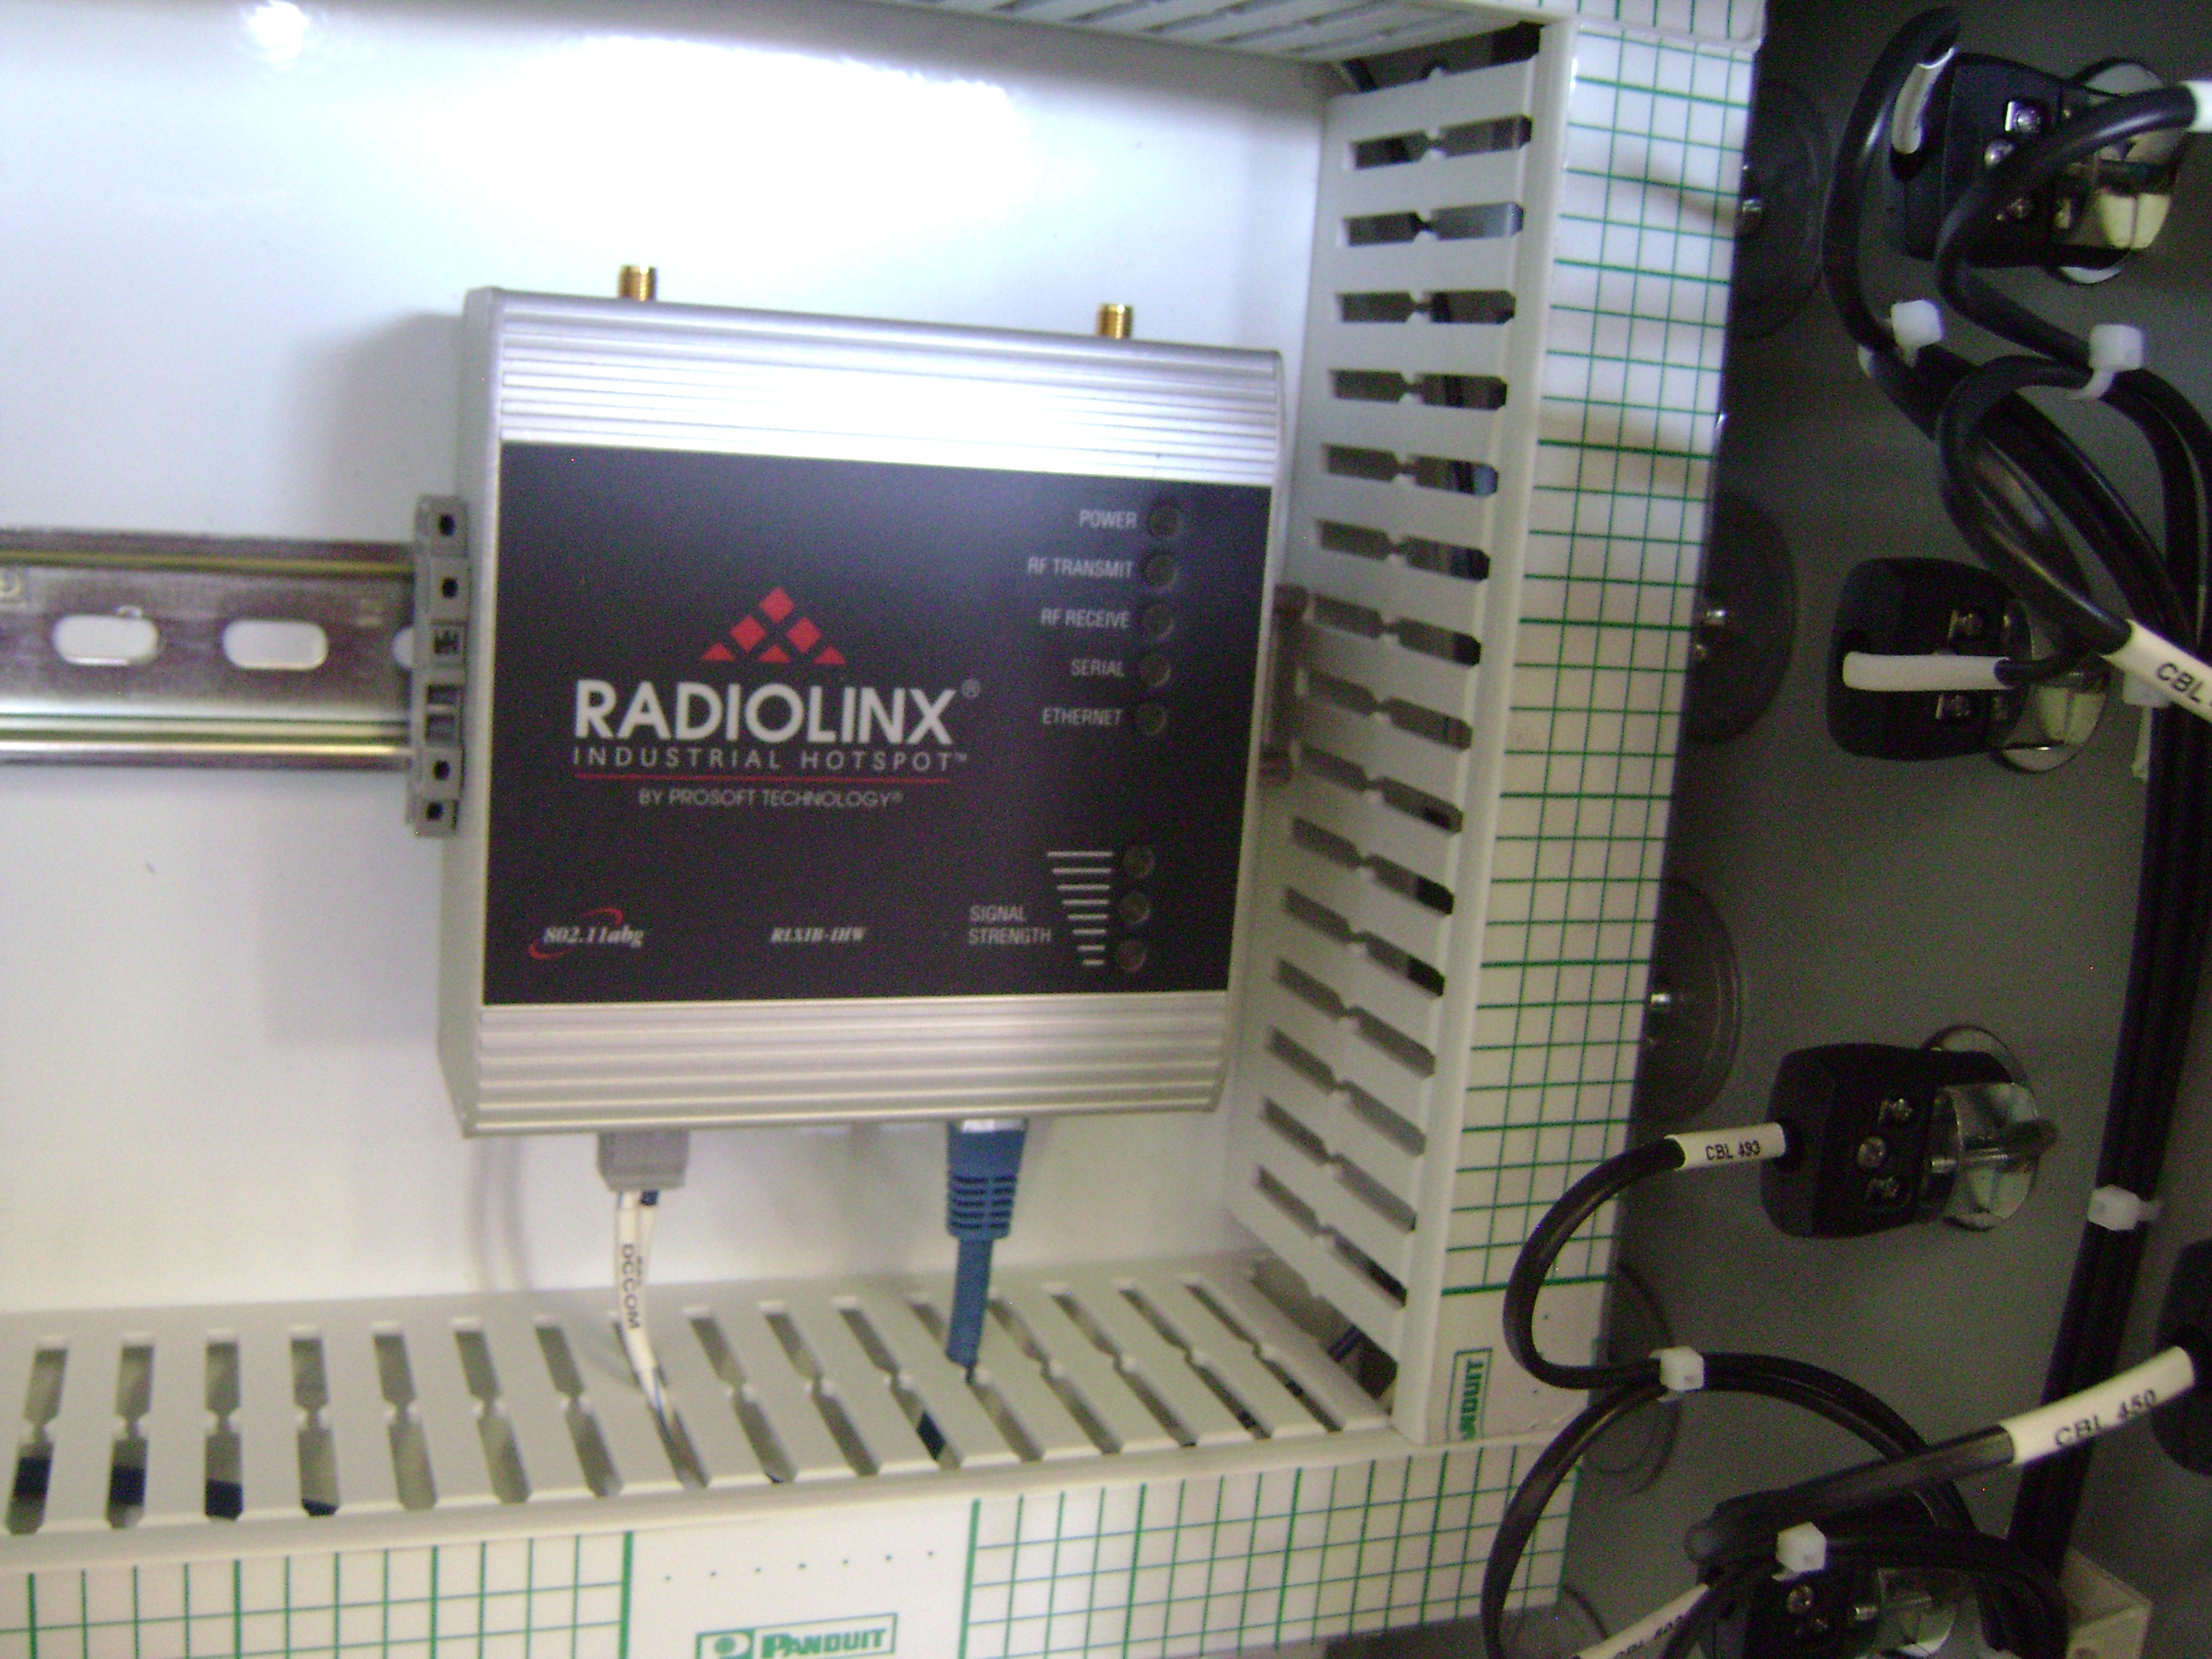 A RadioLinx ethernet controller